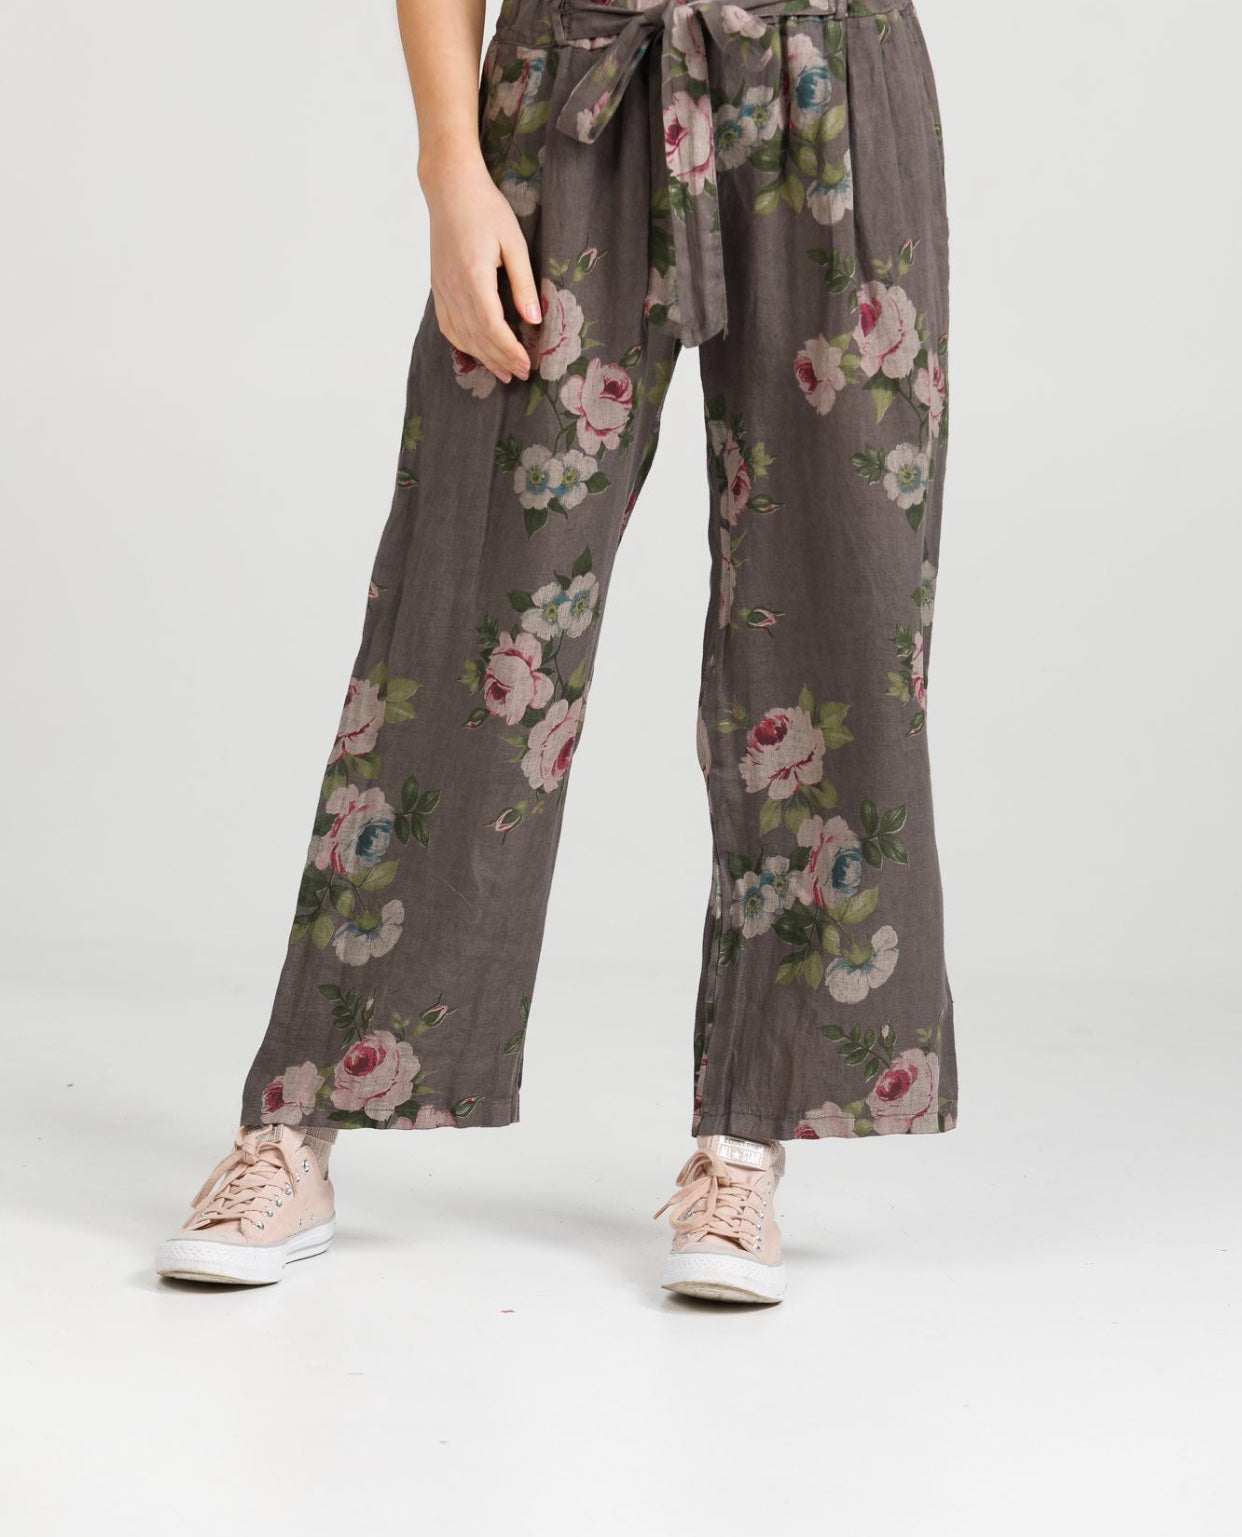 Eva linen floral Pants. Charcoal